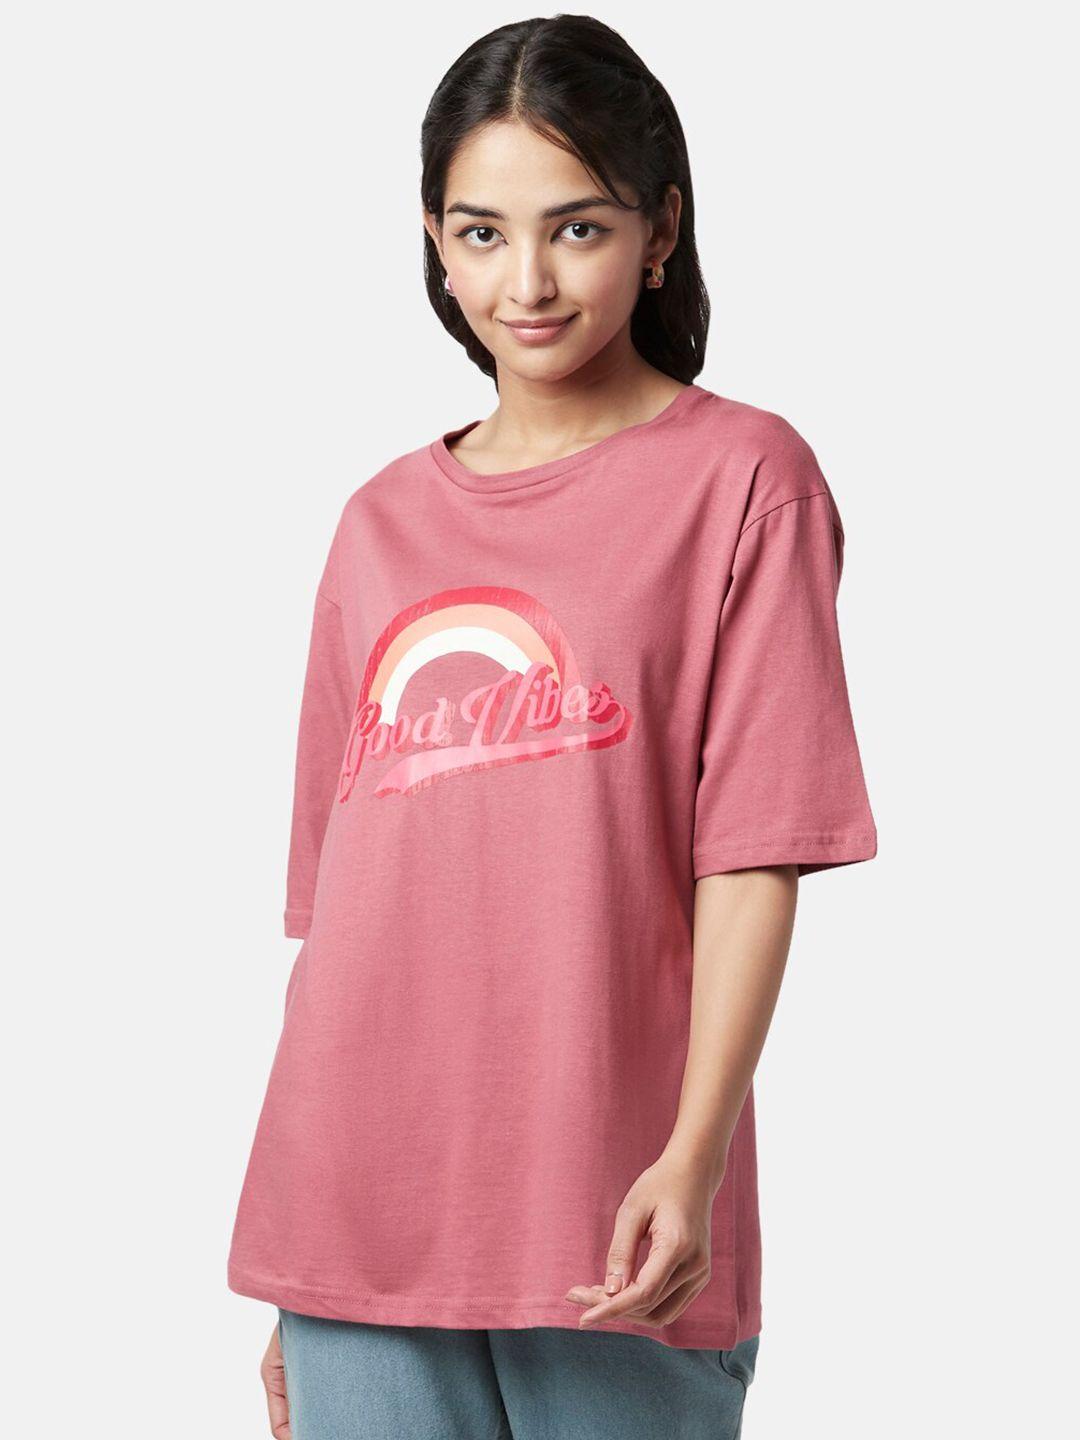 yu by pantaloons women typography printed drop-shoulder sleeves cotton t-shirt